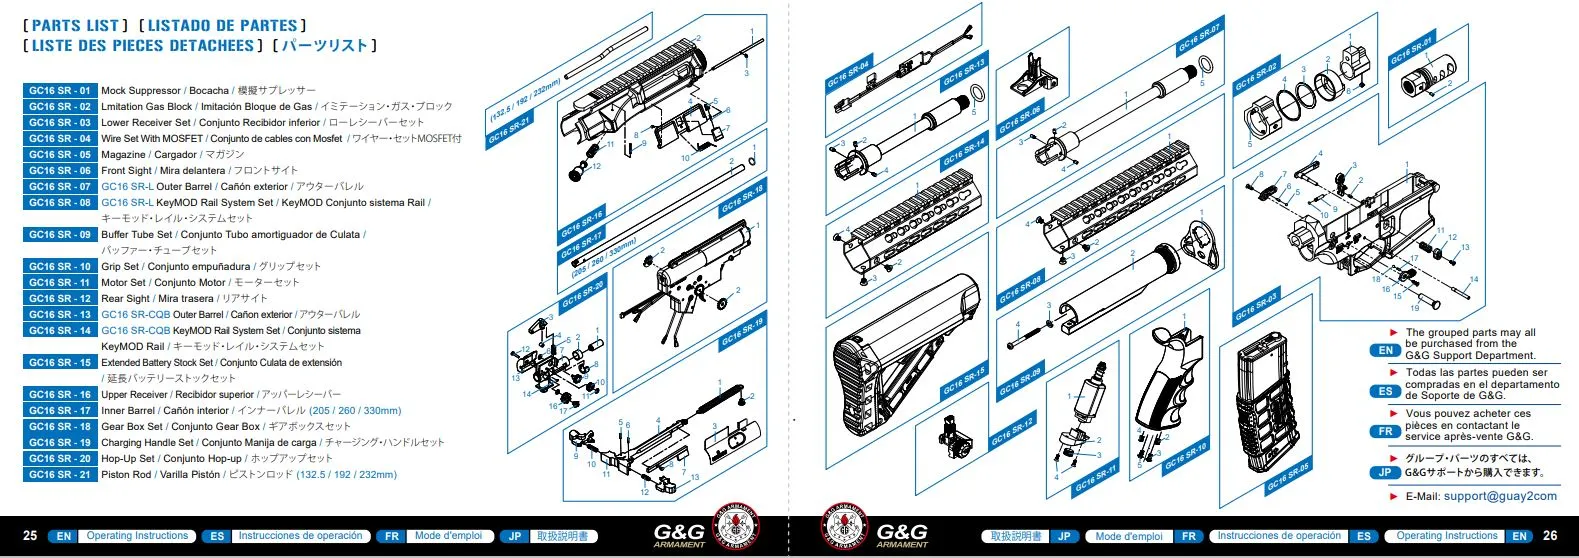 Spare Part GC16 SR-11 #2,3,4 (#4 2pcs.) - Motor Plate with srews for GC16 SR Series - G&G